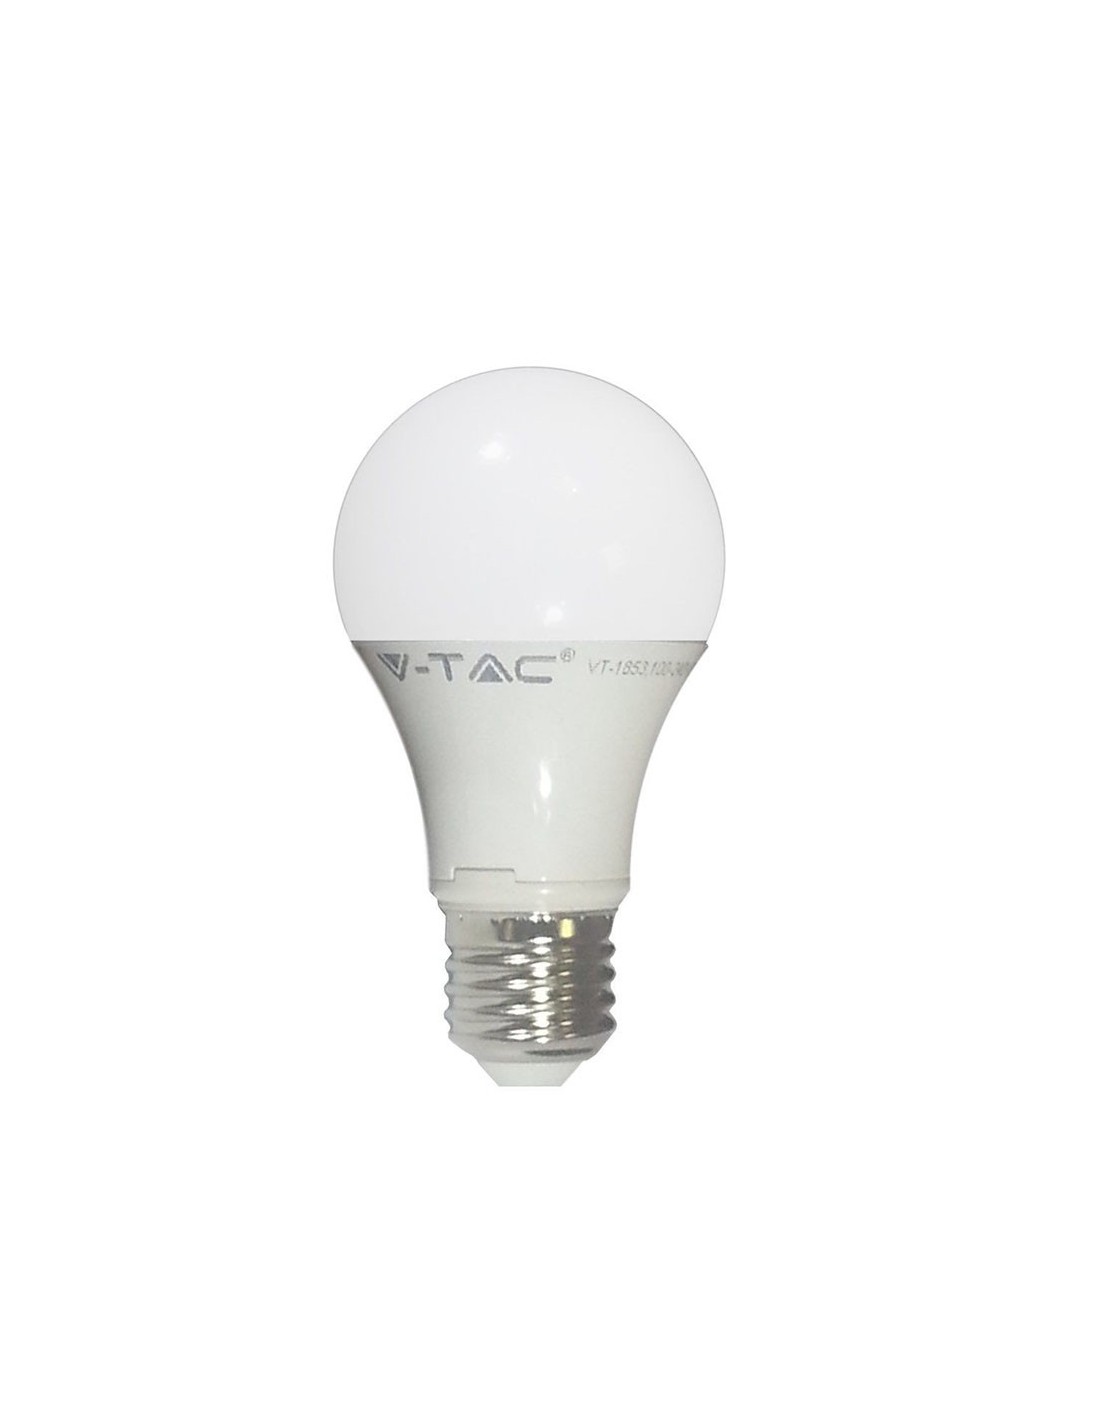 Lampadina led filamento vintage 6w attacco grande E27 trasparente luce  calda fredda bianca a basso consumo